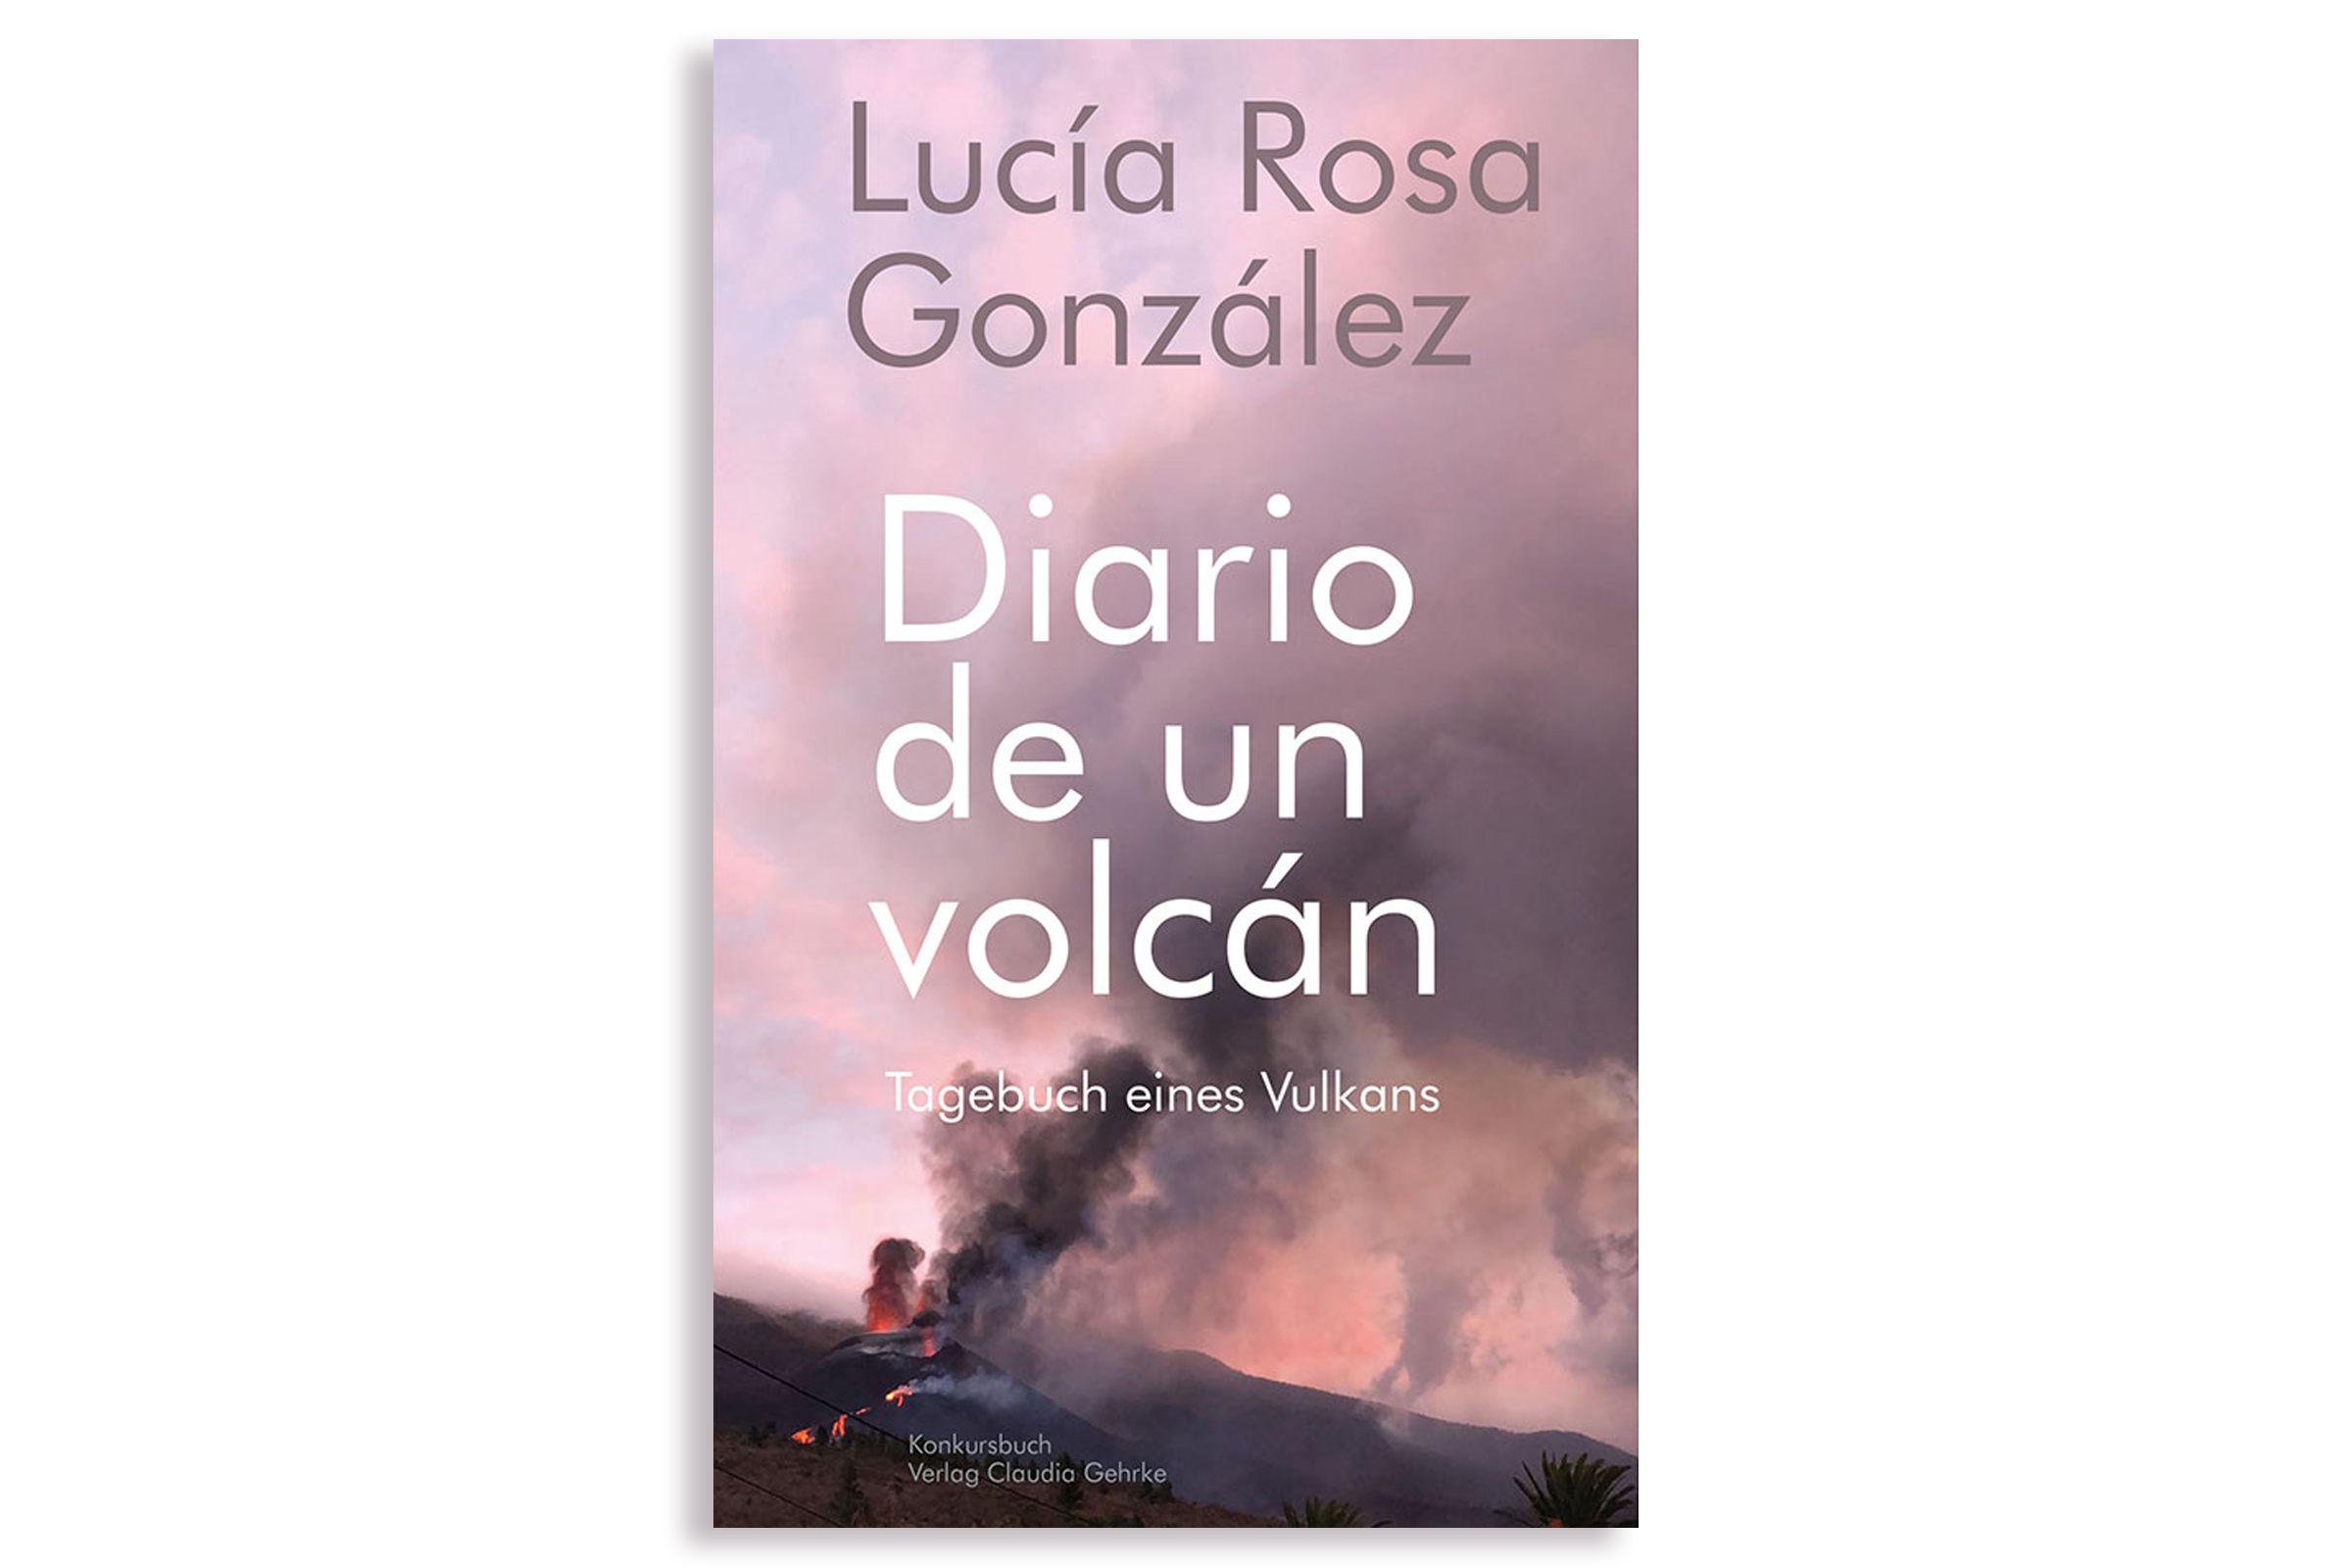 tagebuch-eines-vulkans-lucia-rosa-gonzalez-la-palma-konkursbuch-verlag-claudia-gehrke----